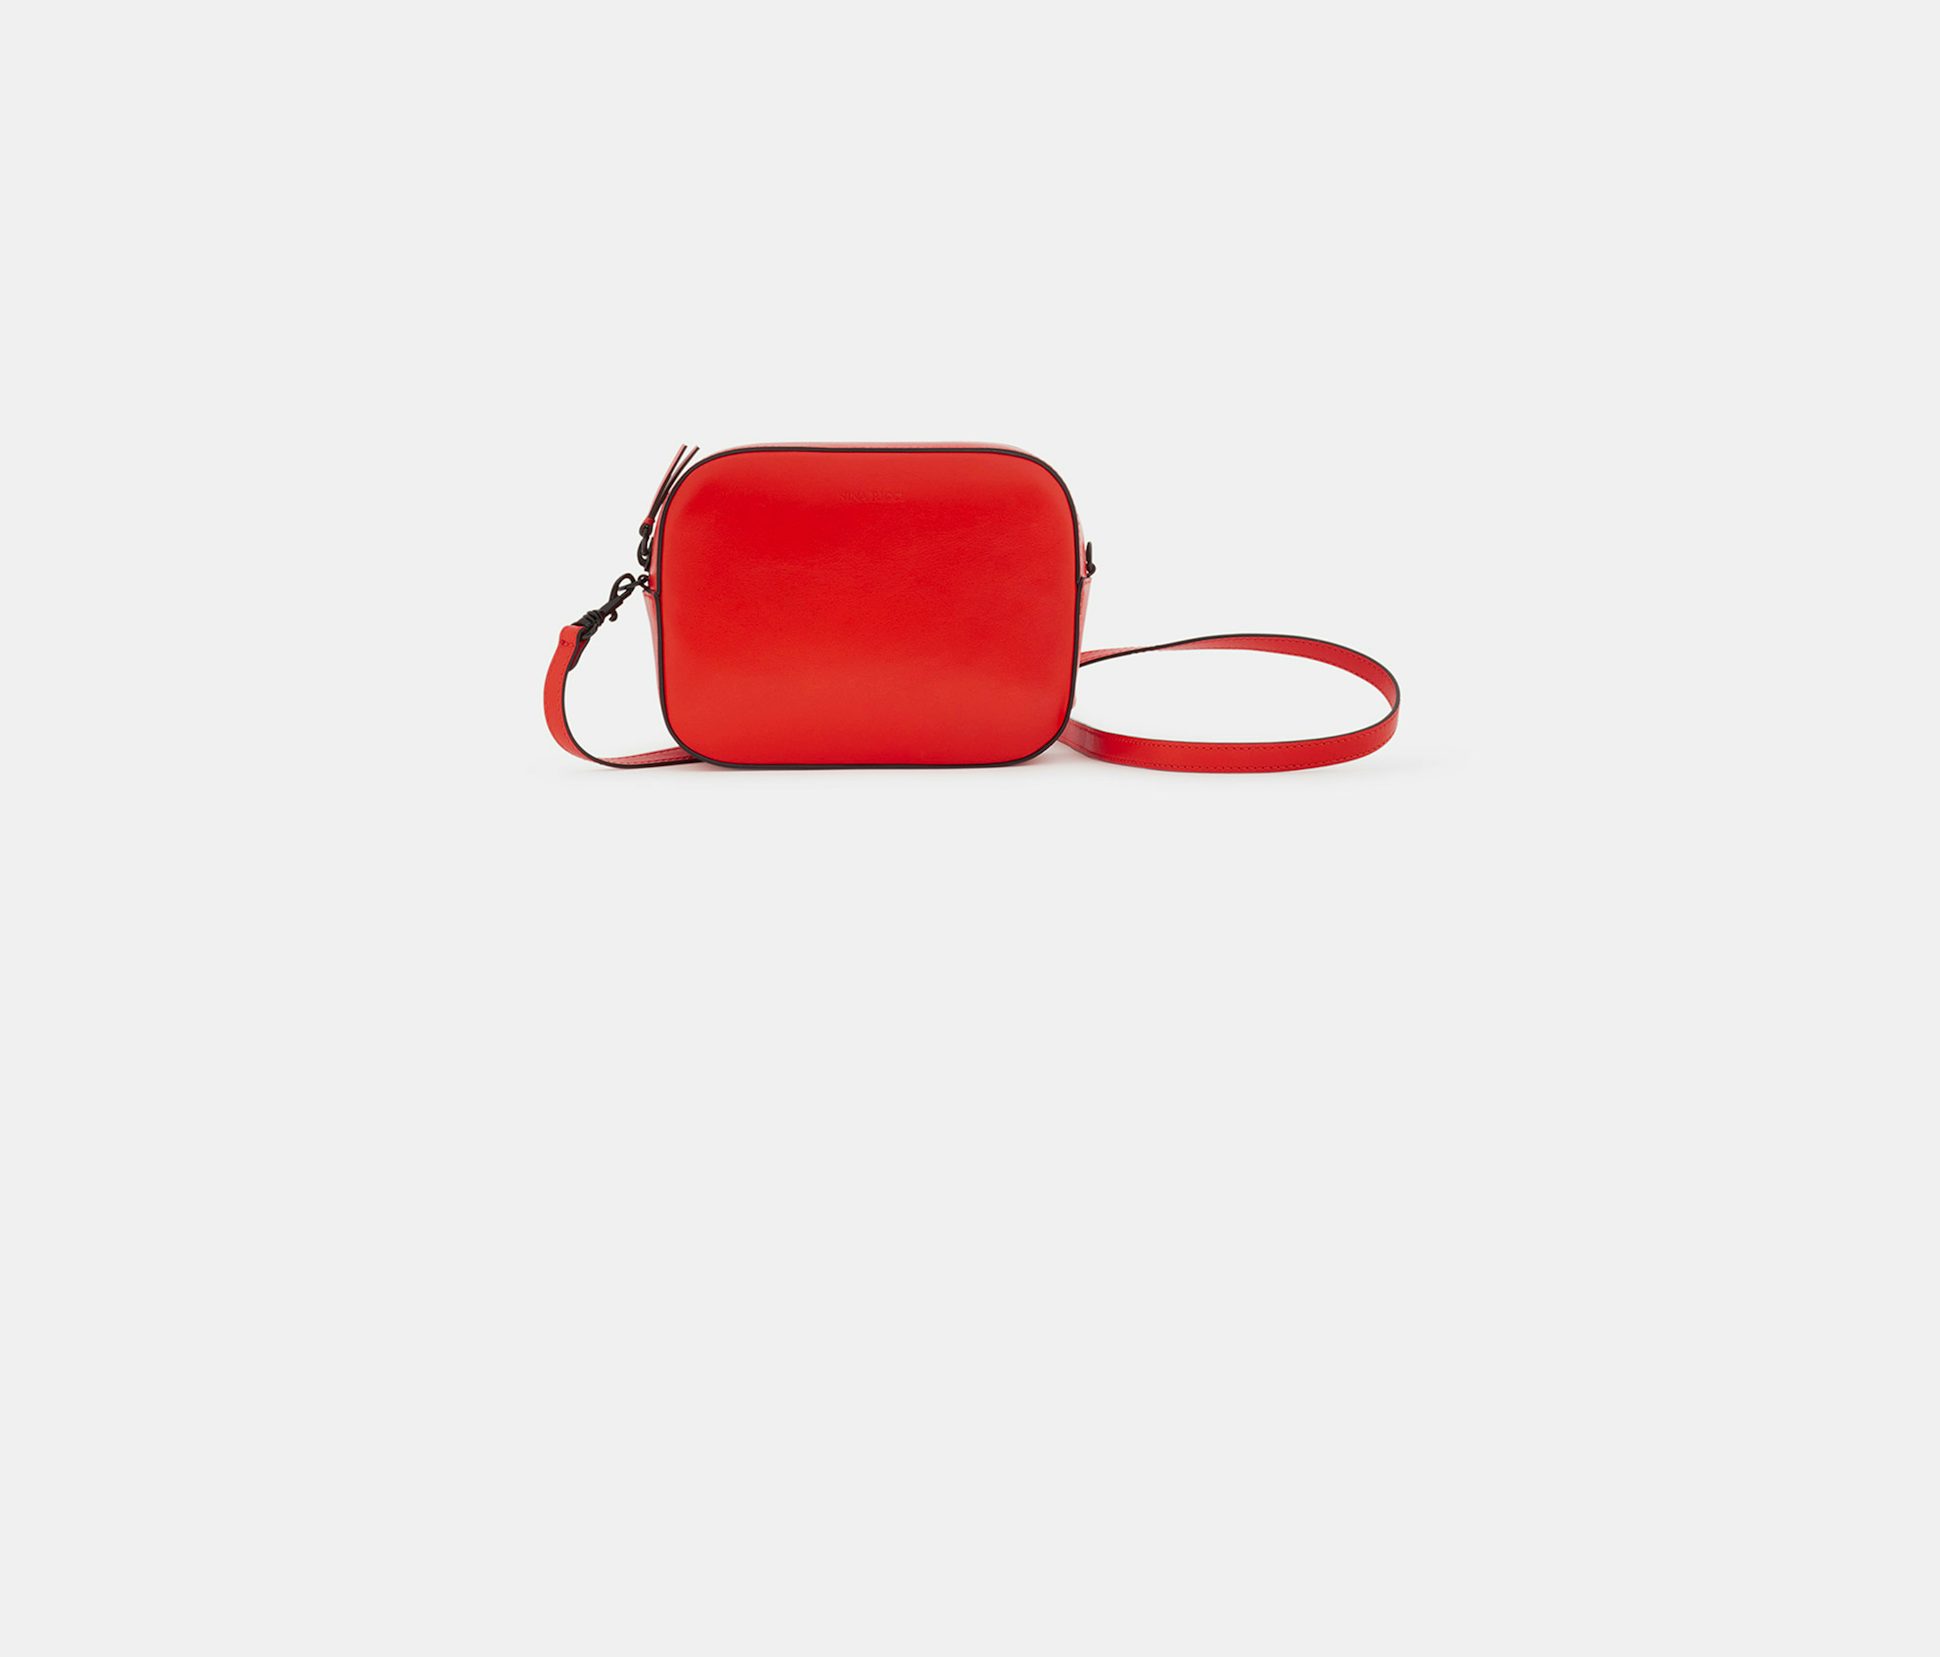 Orange Leather Camera Bag with Shoulder Strap - Nina Ricci